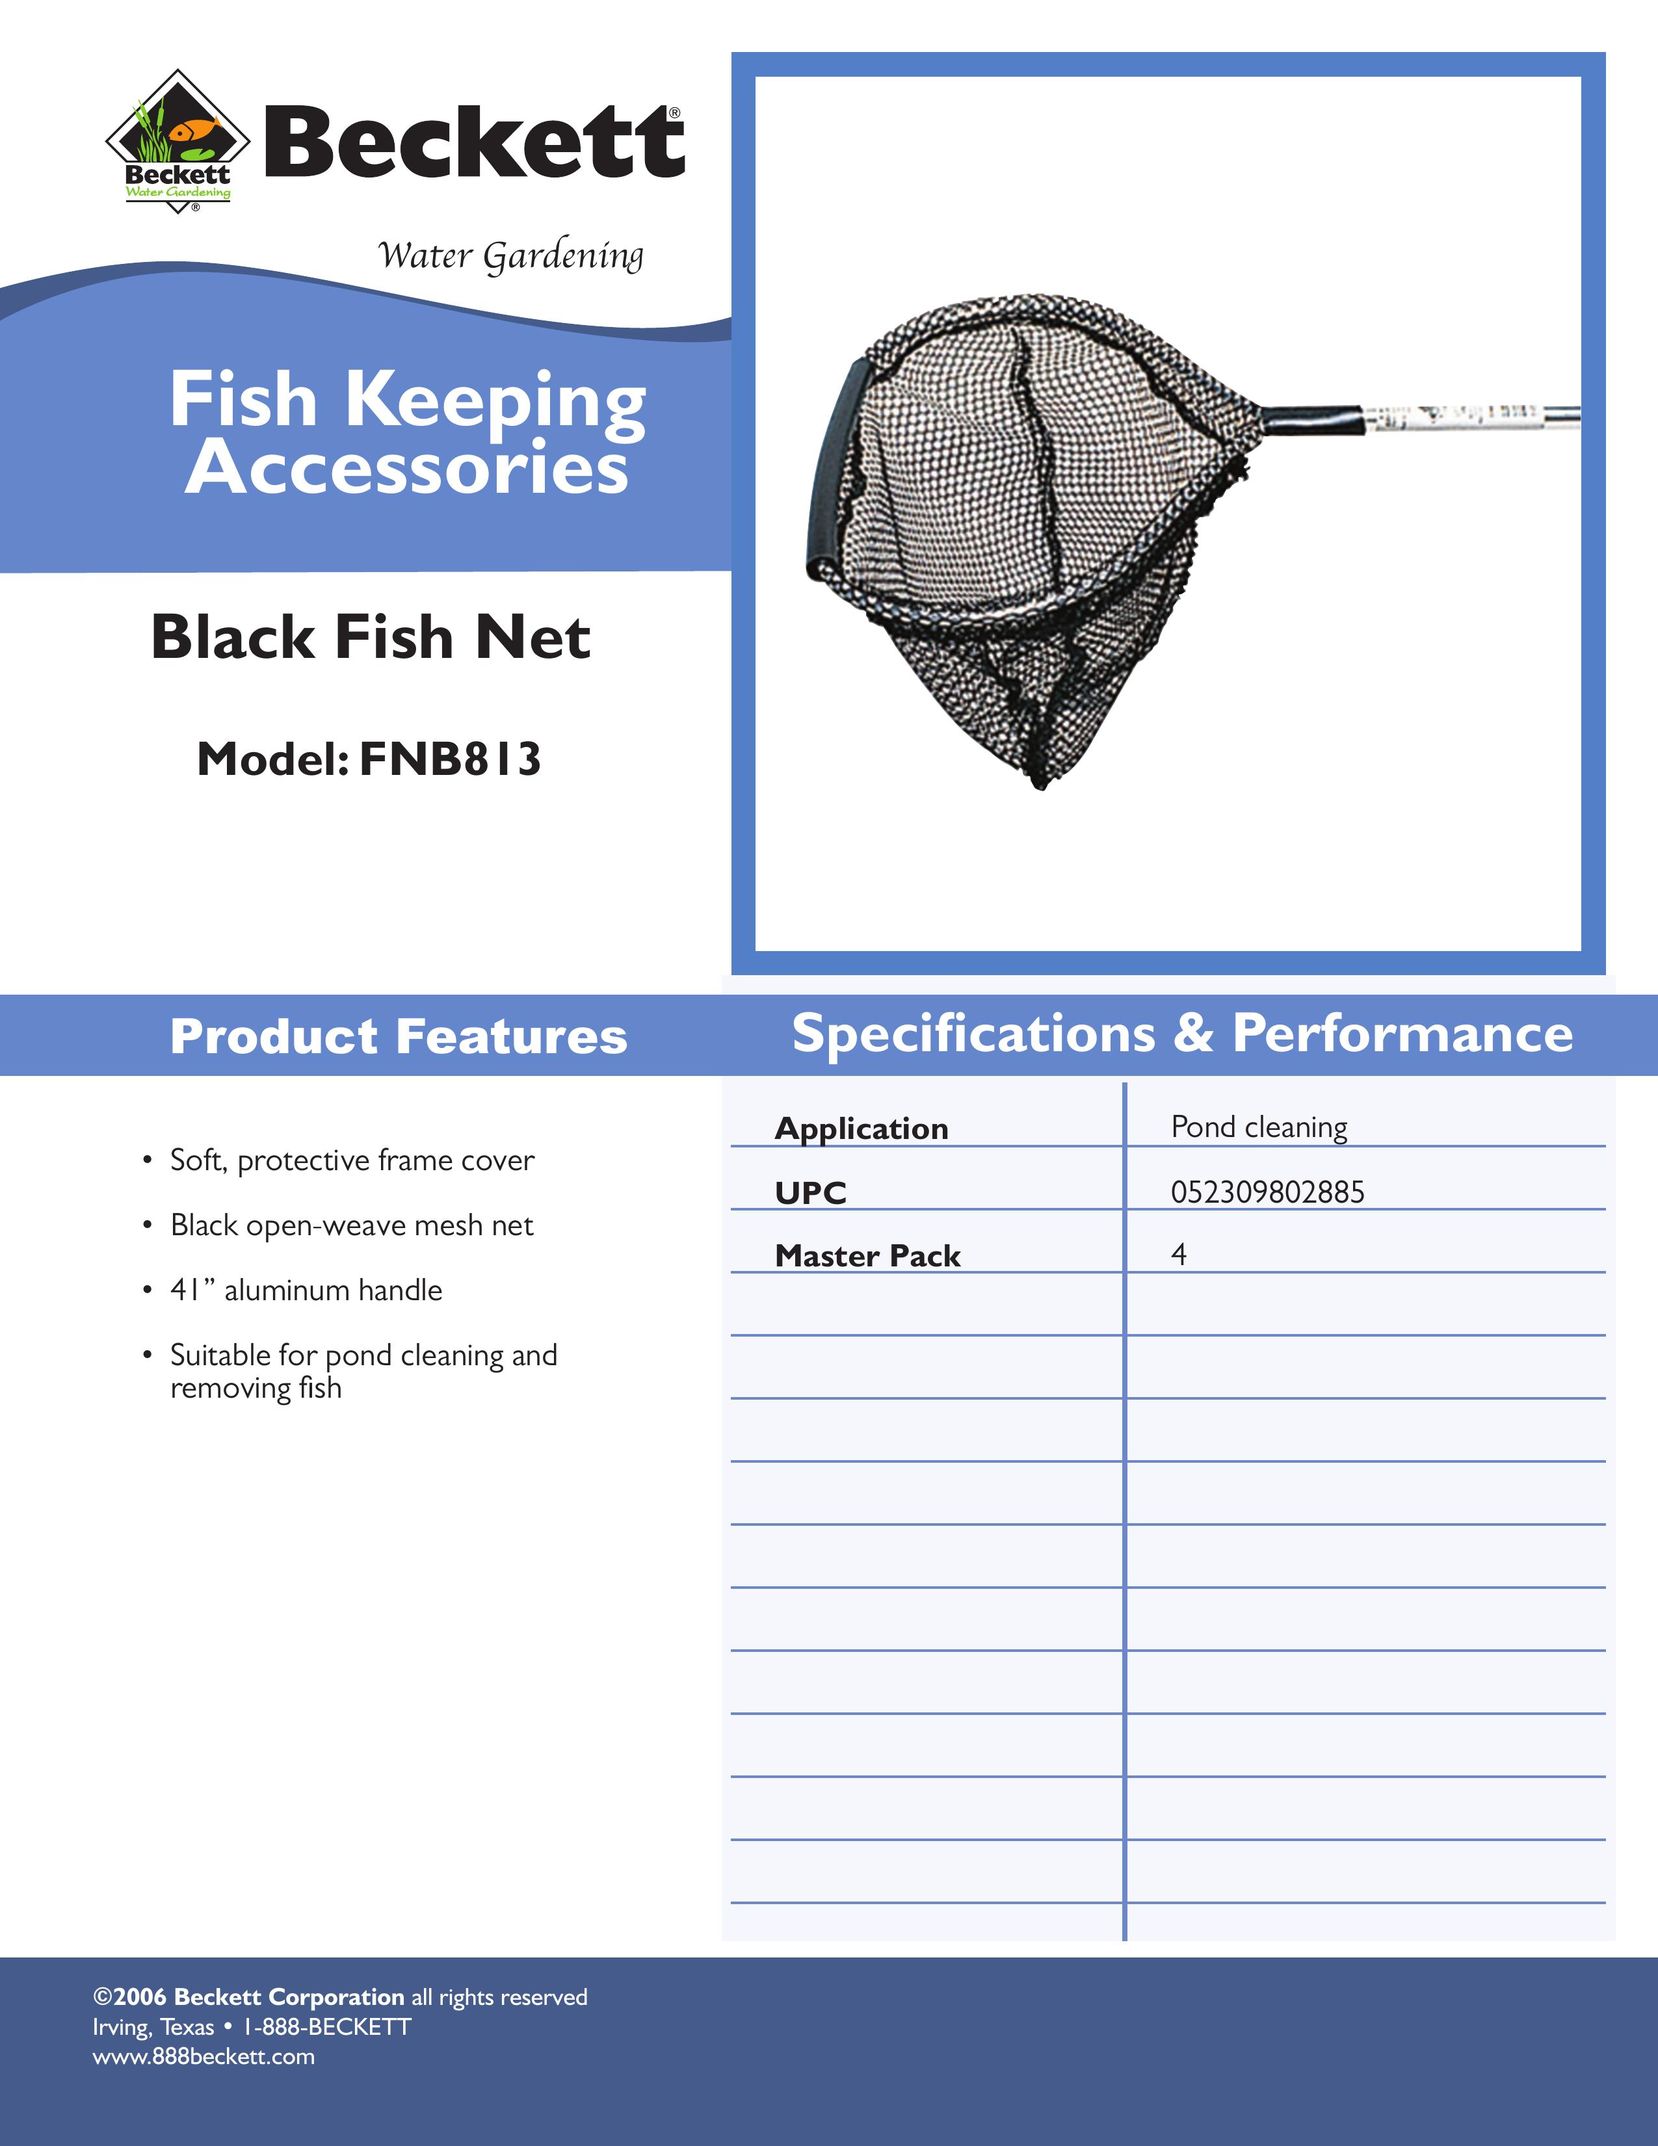 Beckett Water Gardening FNB813 Fishing Equipment User Manual